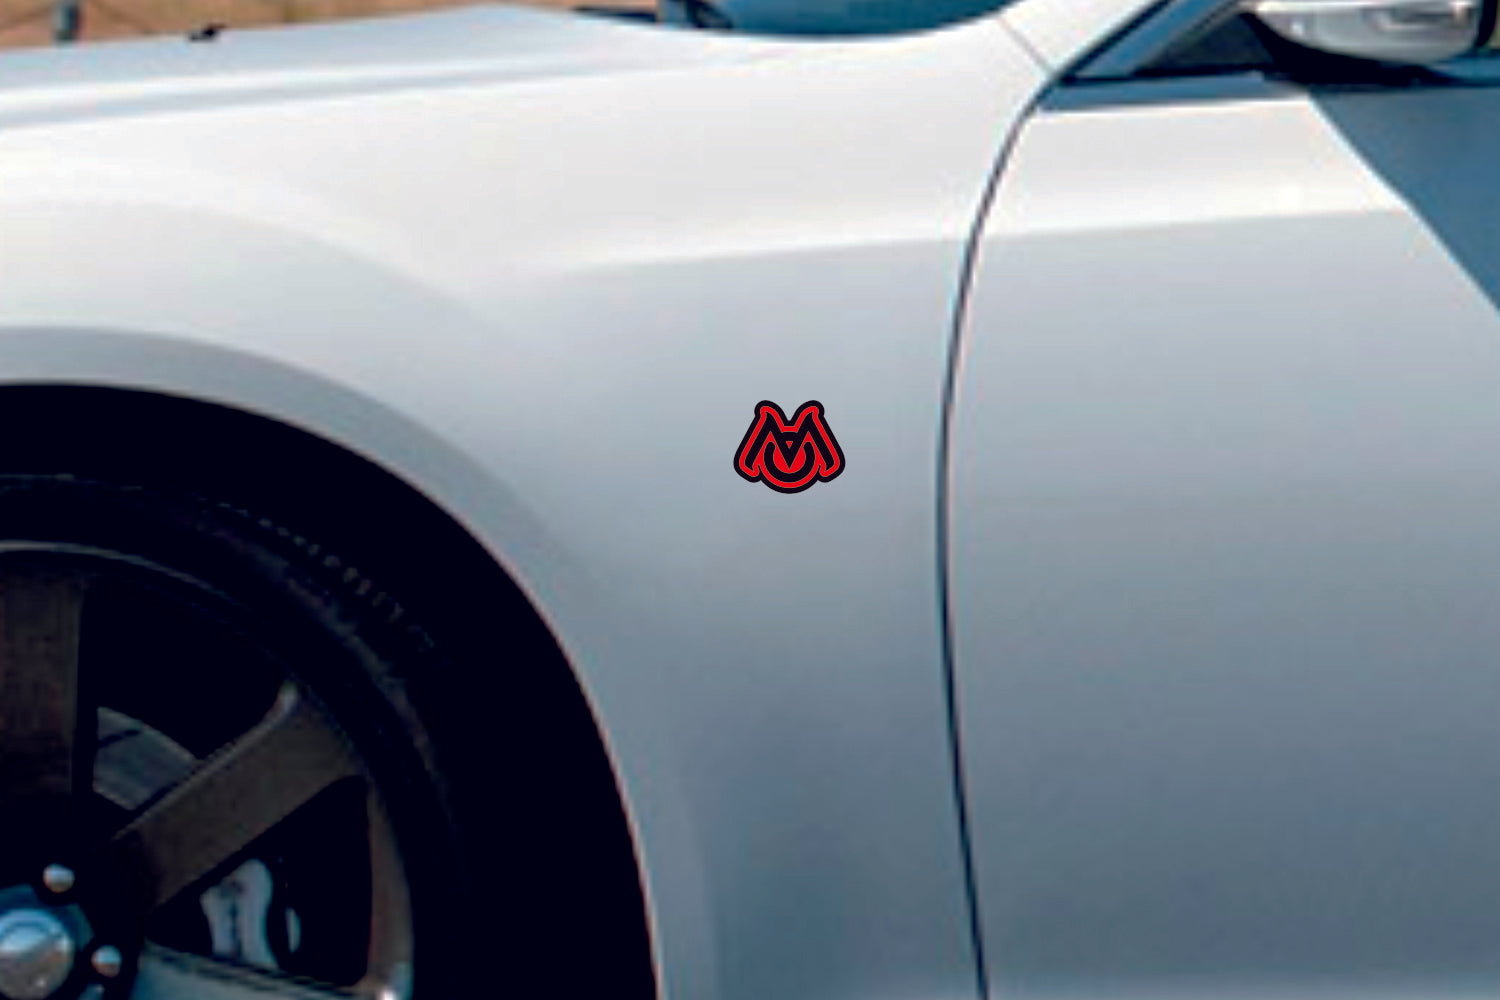 Chrysler emblem for fenders with Mopar logo (type 4) - decoinfabric